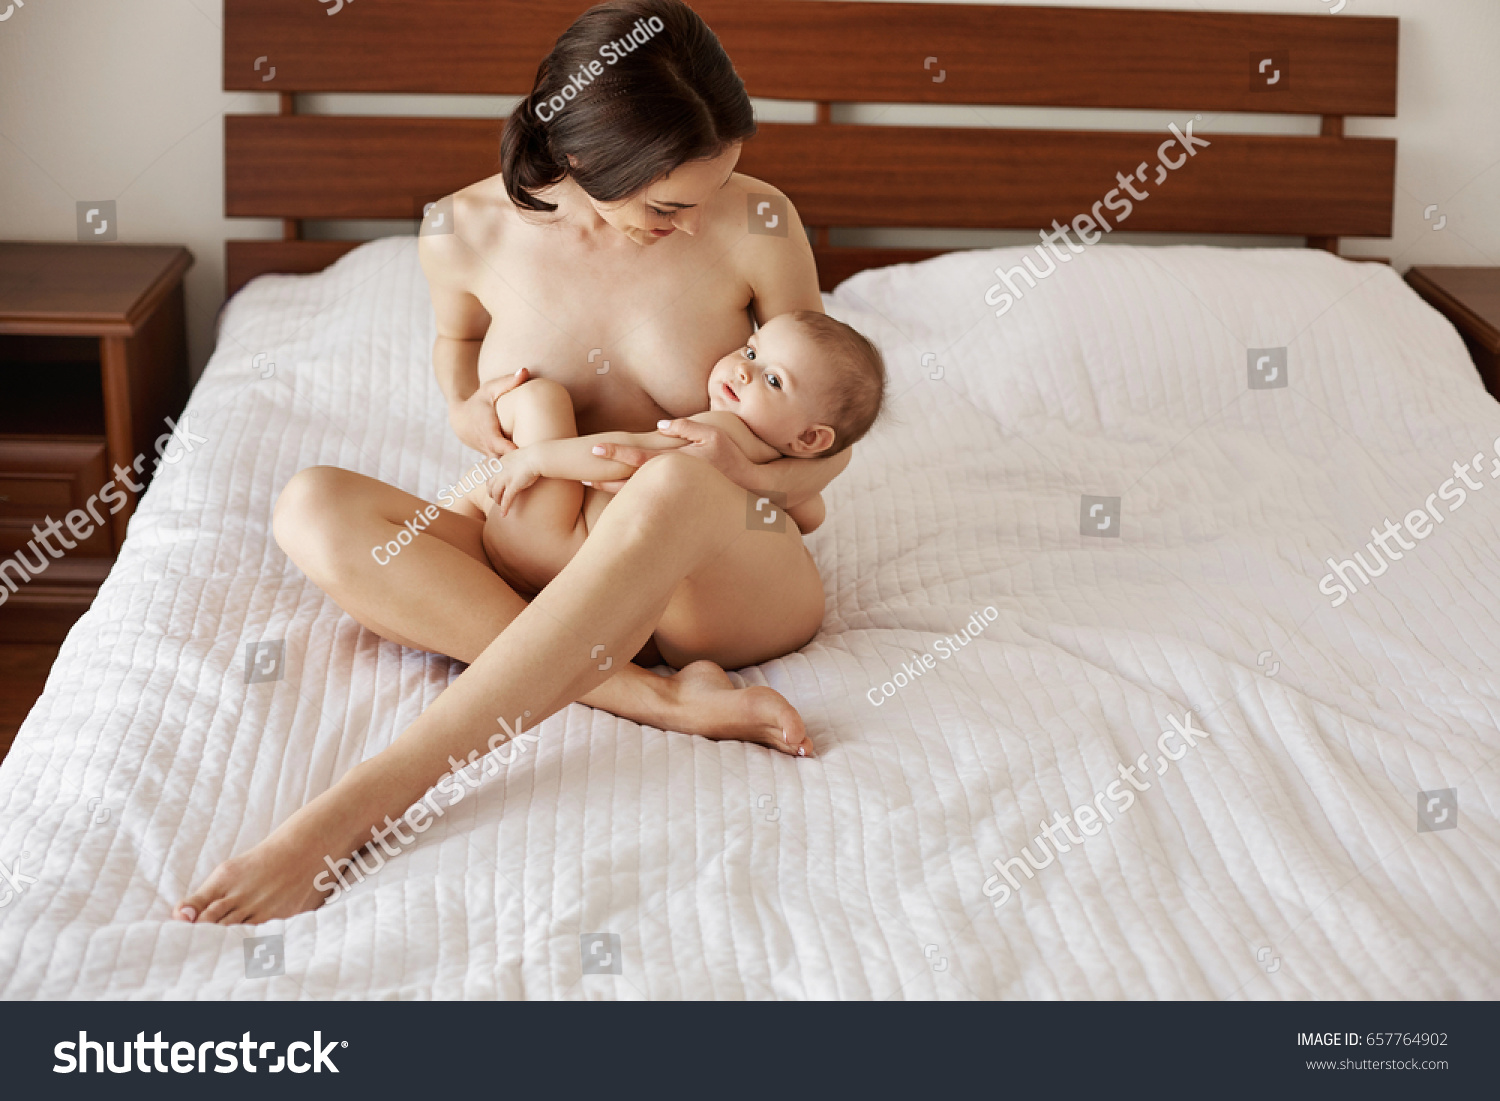 Стоковая фотография 657764902: Young Attractive Nude Mom Breastfeeding Hugg...